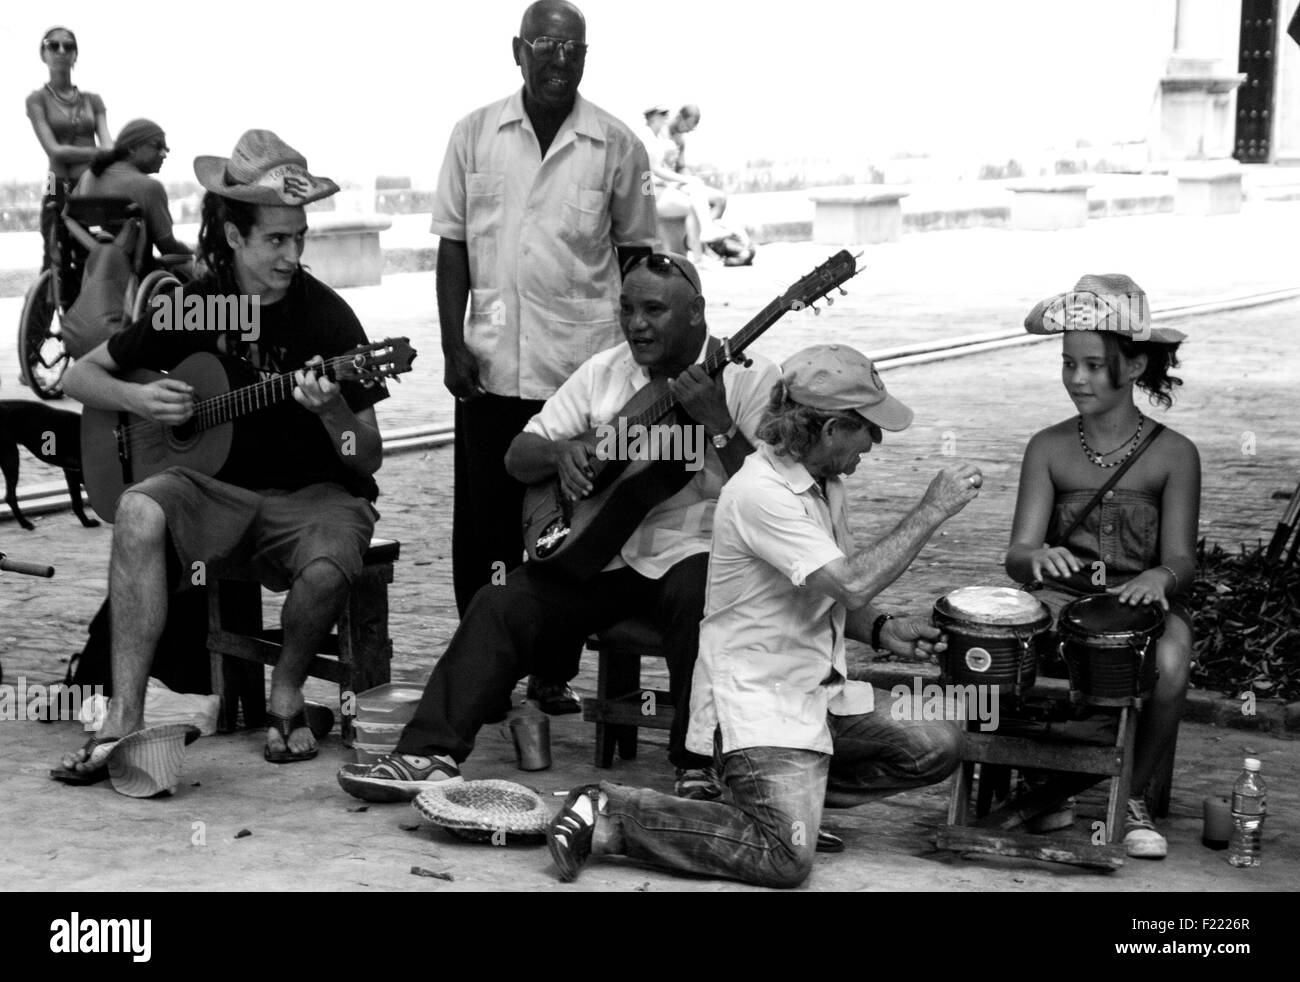 Street music with Caribbean sounds. Cuba. Stock Photo